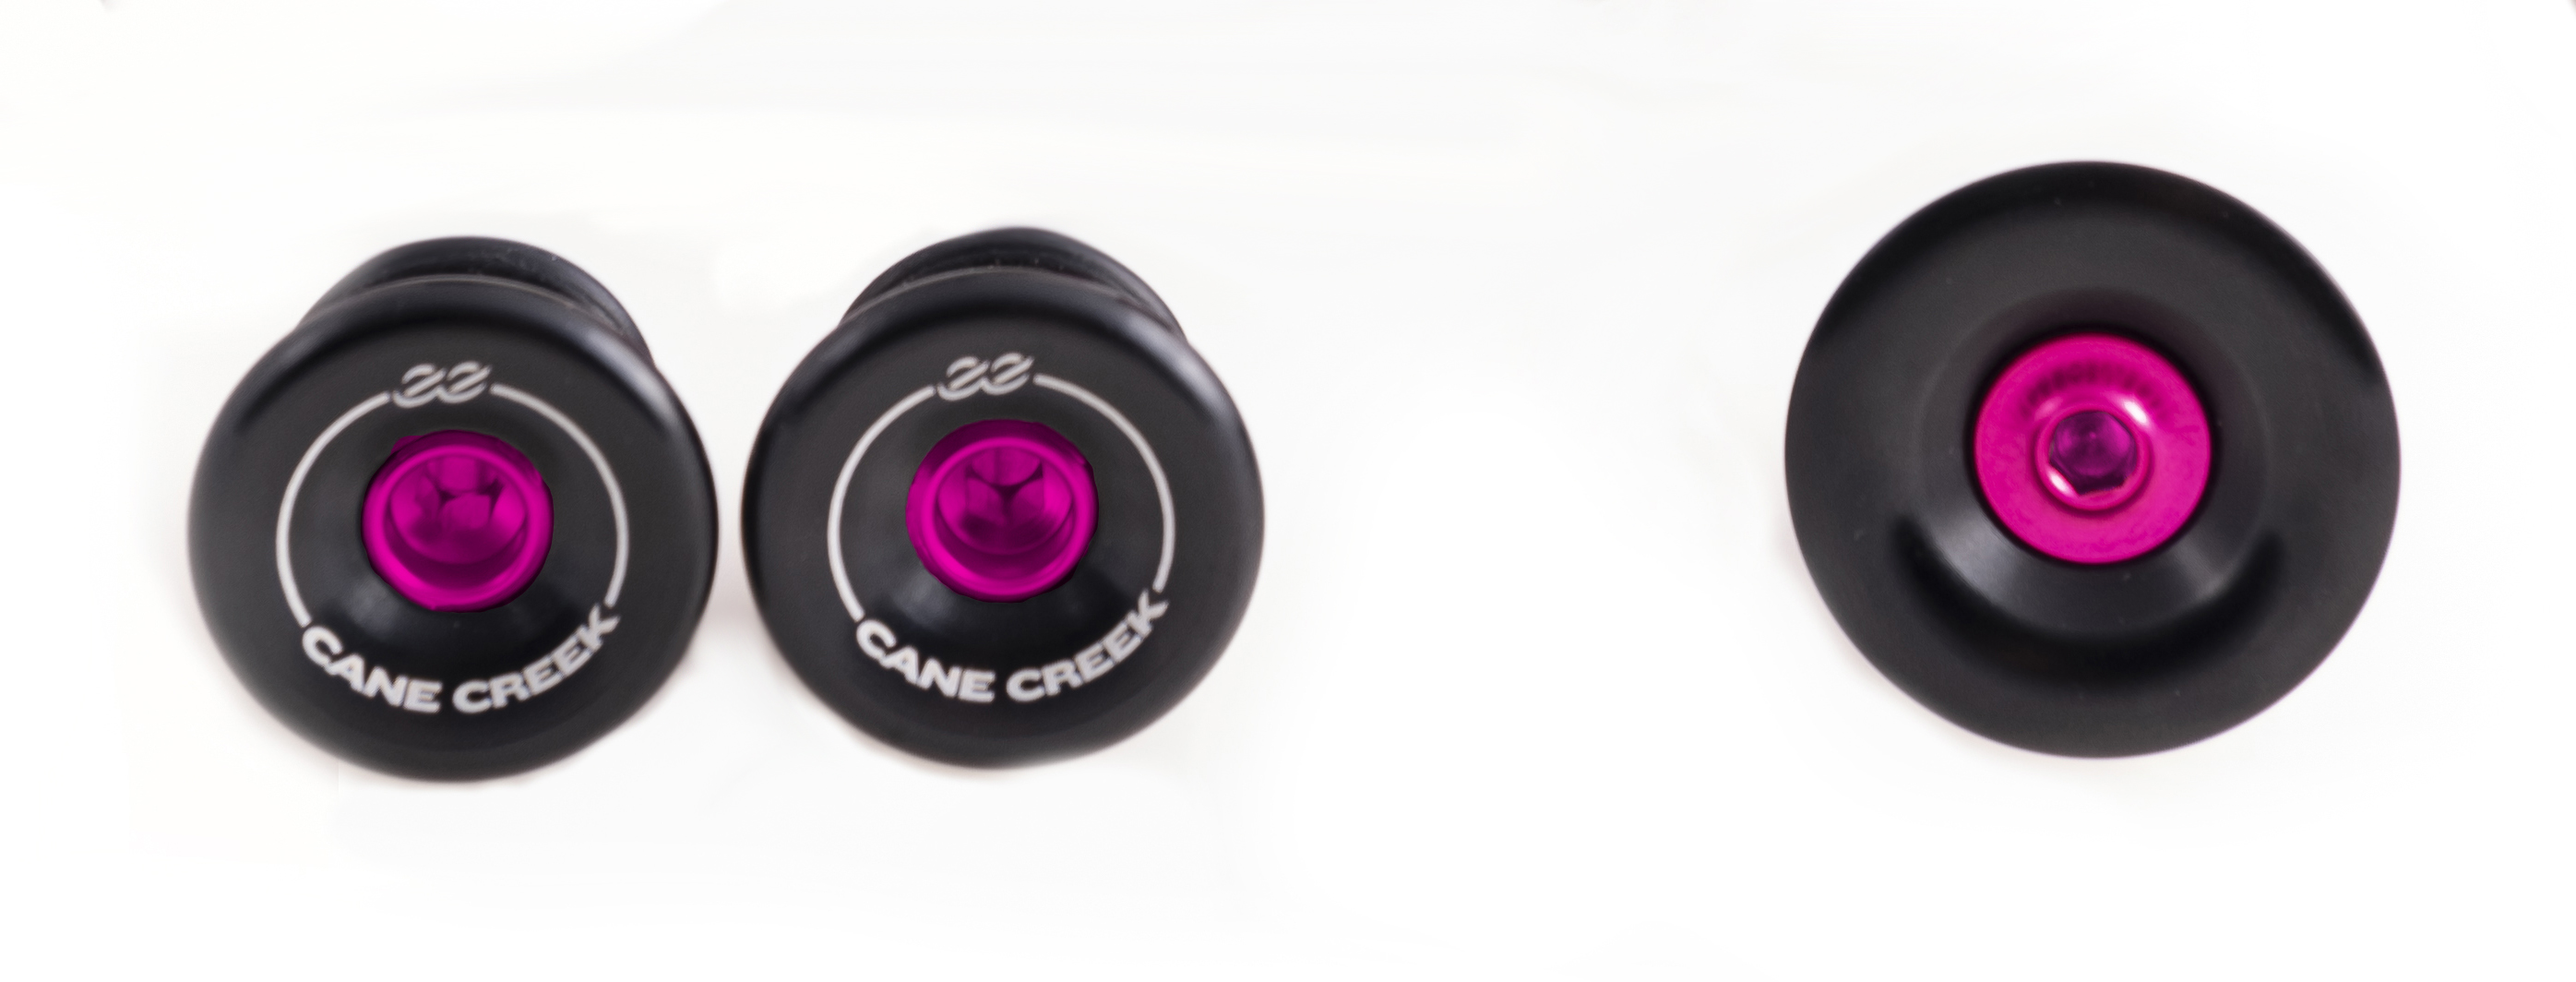 Cane Creek eeBrake G4 gets the Limited Edition treatment w/ Pink El Rosado kit